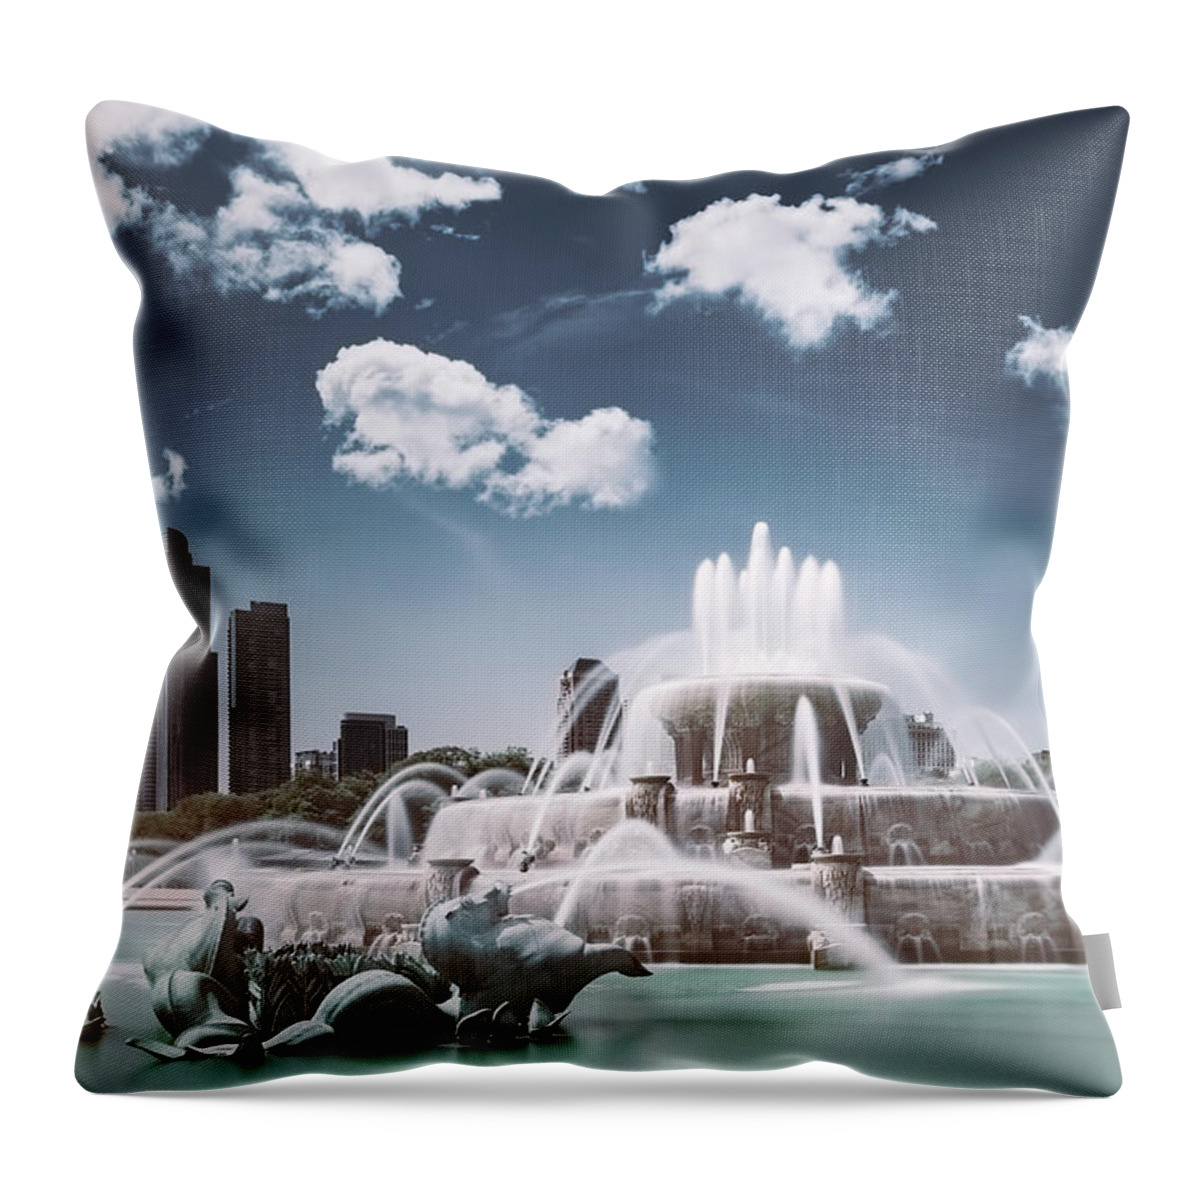 #faatoppicks Throw Pillow featuring the photograph Buckingham Fountain by Scott Norris